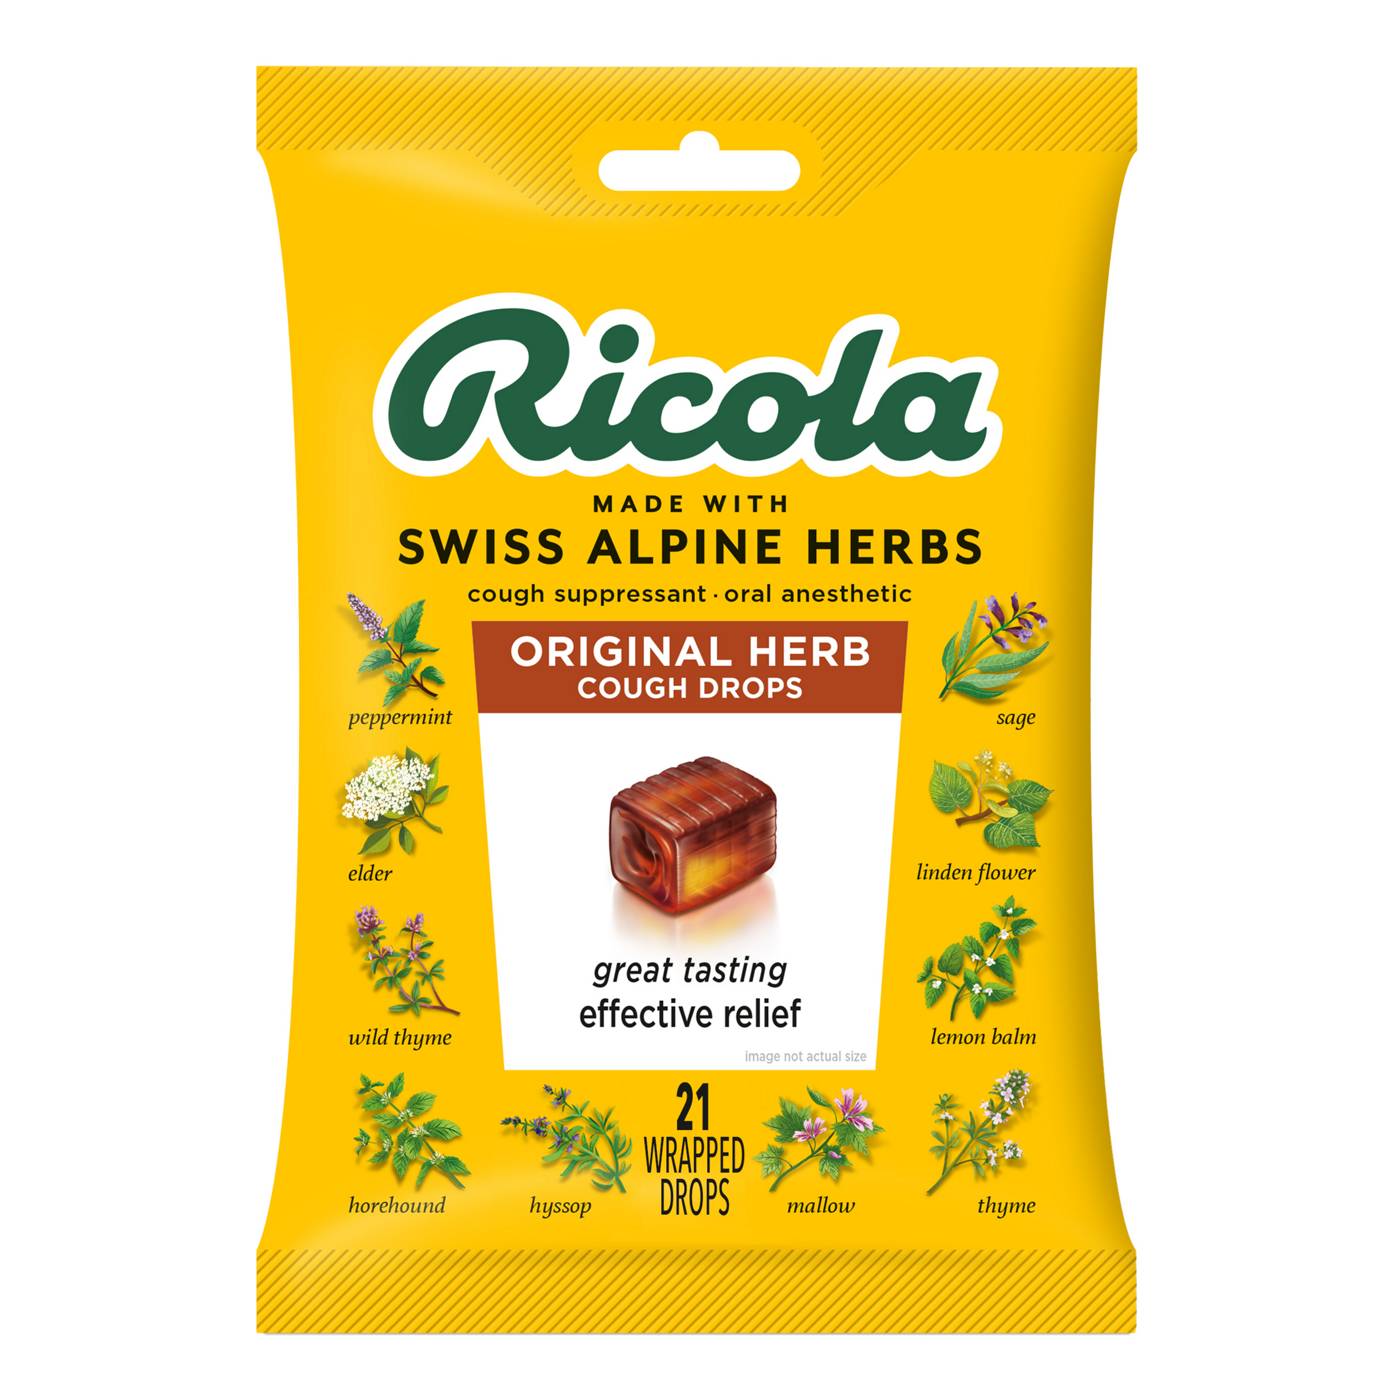 Ricola Cough Drops - Original Herb; image 1 of 8